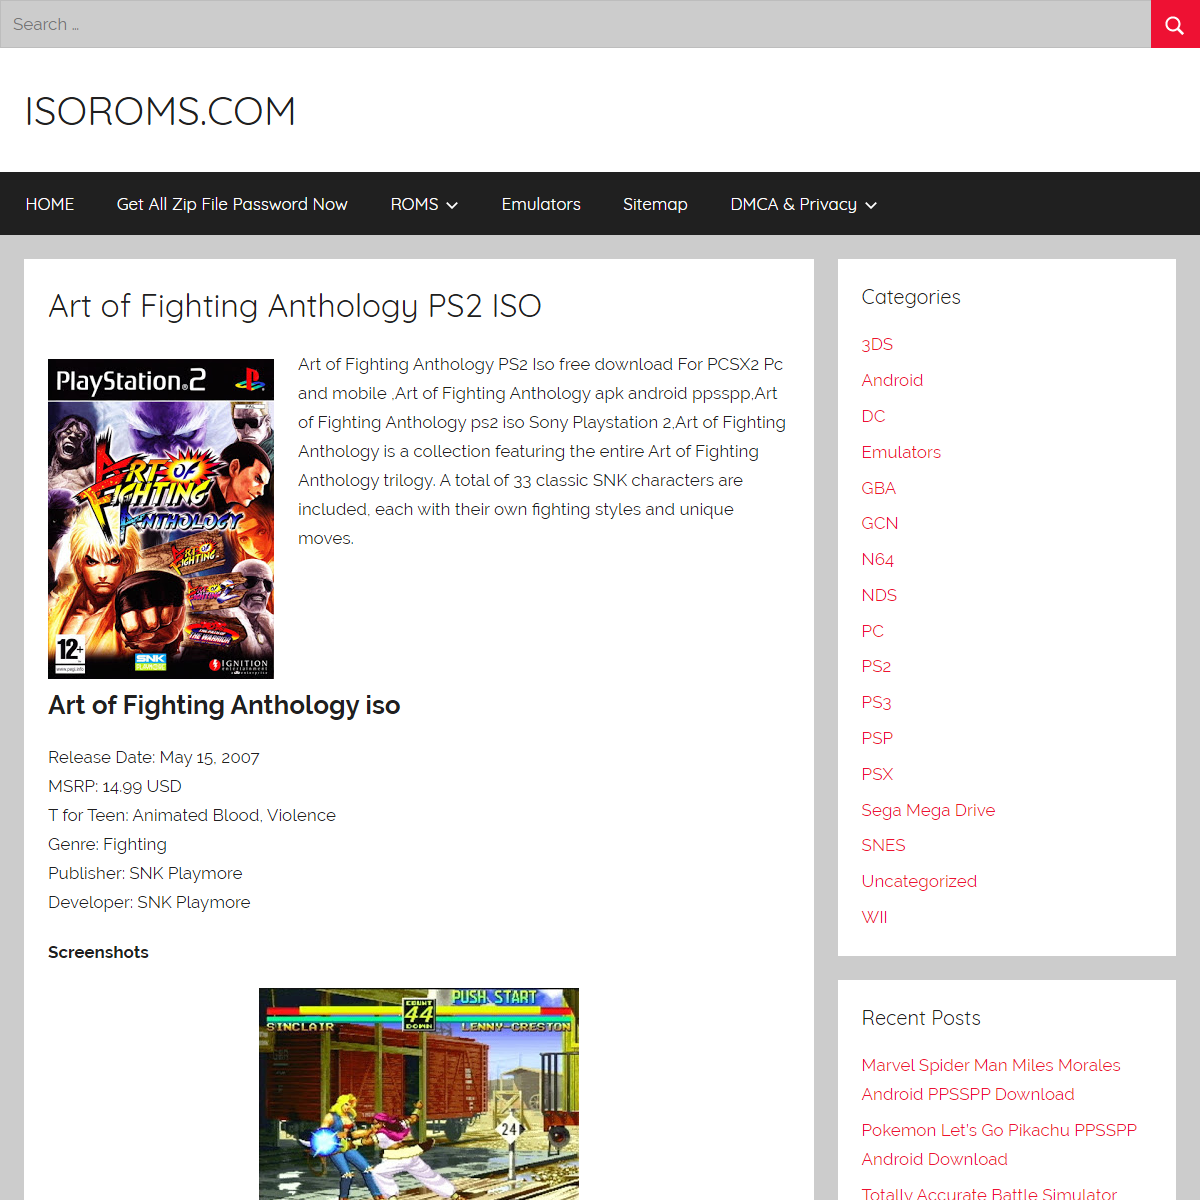 Art of Fighting Anthology PS2 ISO â€“ ISOROMS.COM